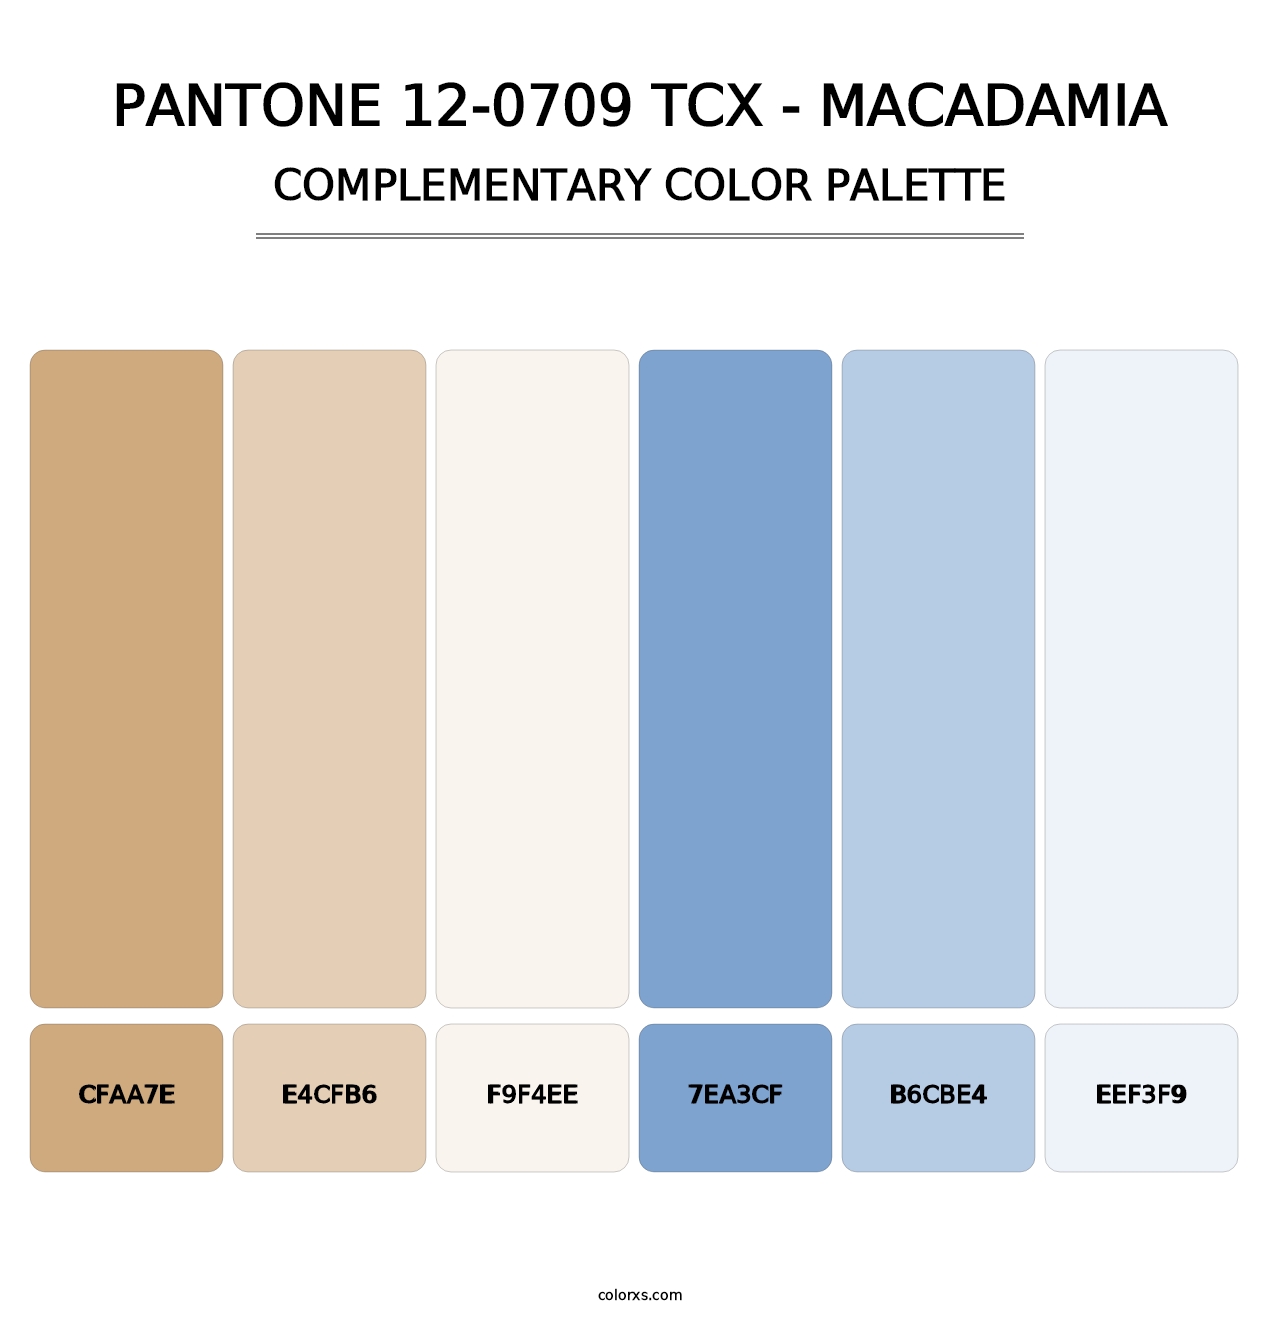 PANTONE 12-0709 TCX - Macadamia - Complementary Color Palette